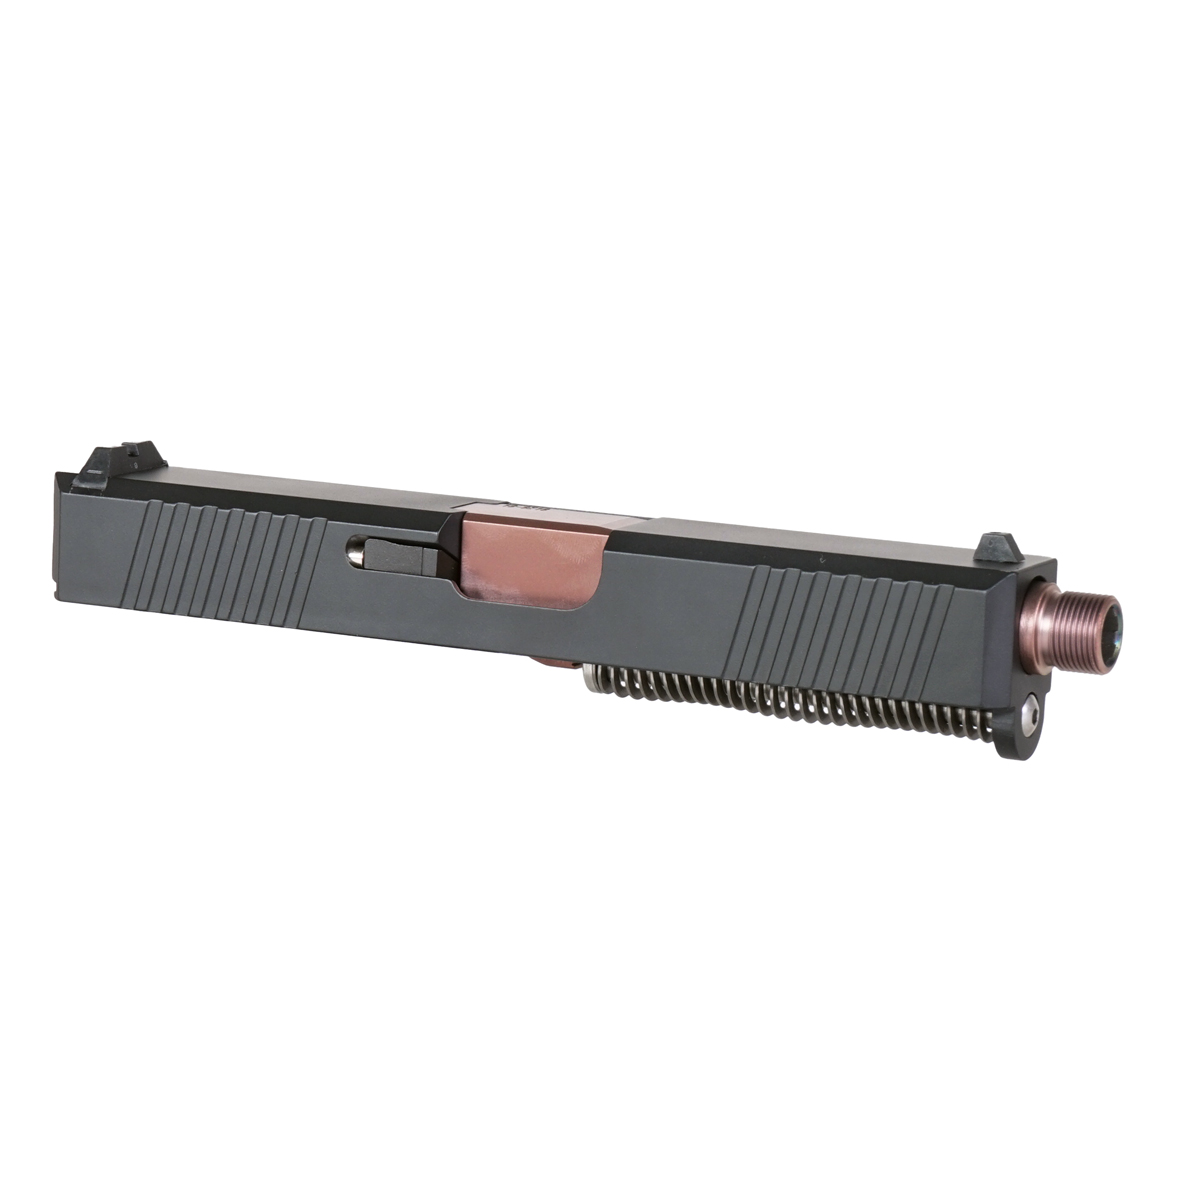 DTT 'Burnside' 9mm Complete Slide Kit - Glock 19 Gen 1-3 Compatible